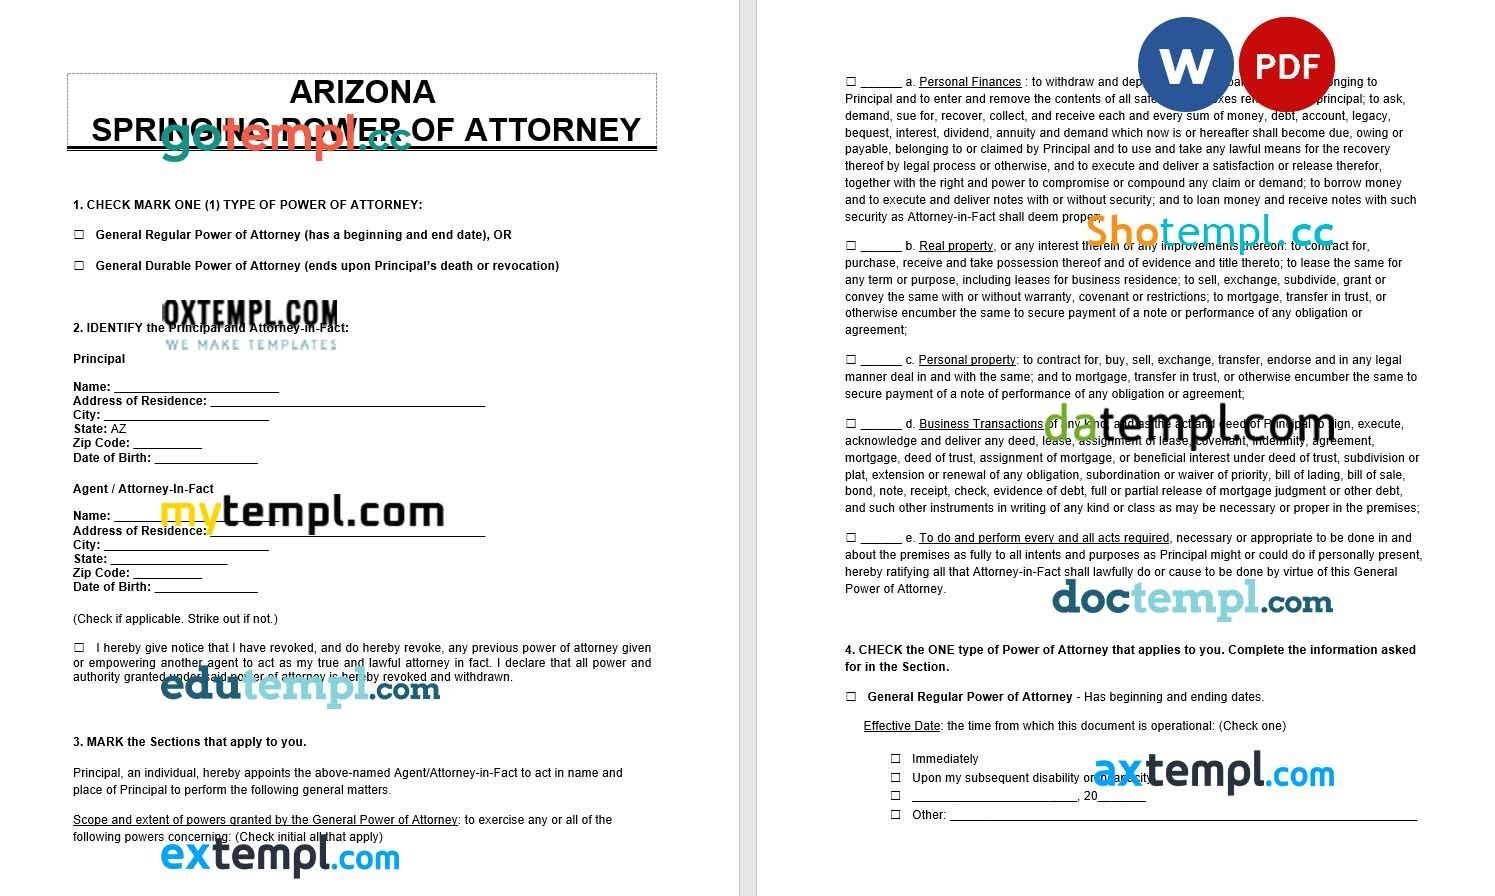 Arizona Springing Power of Attorney example, fully editable